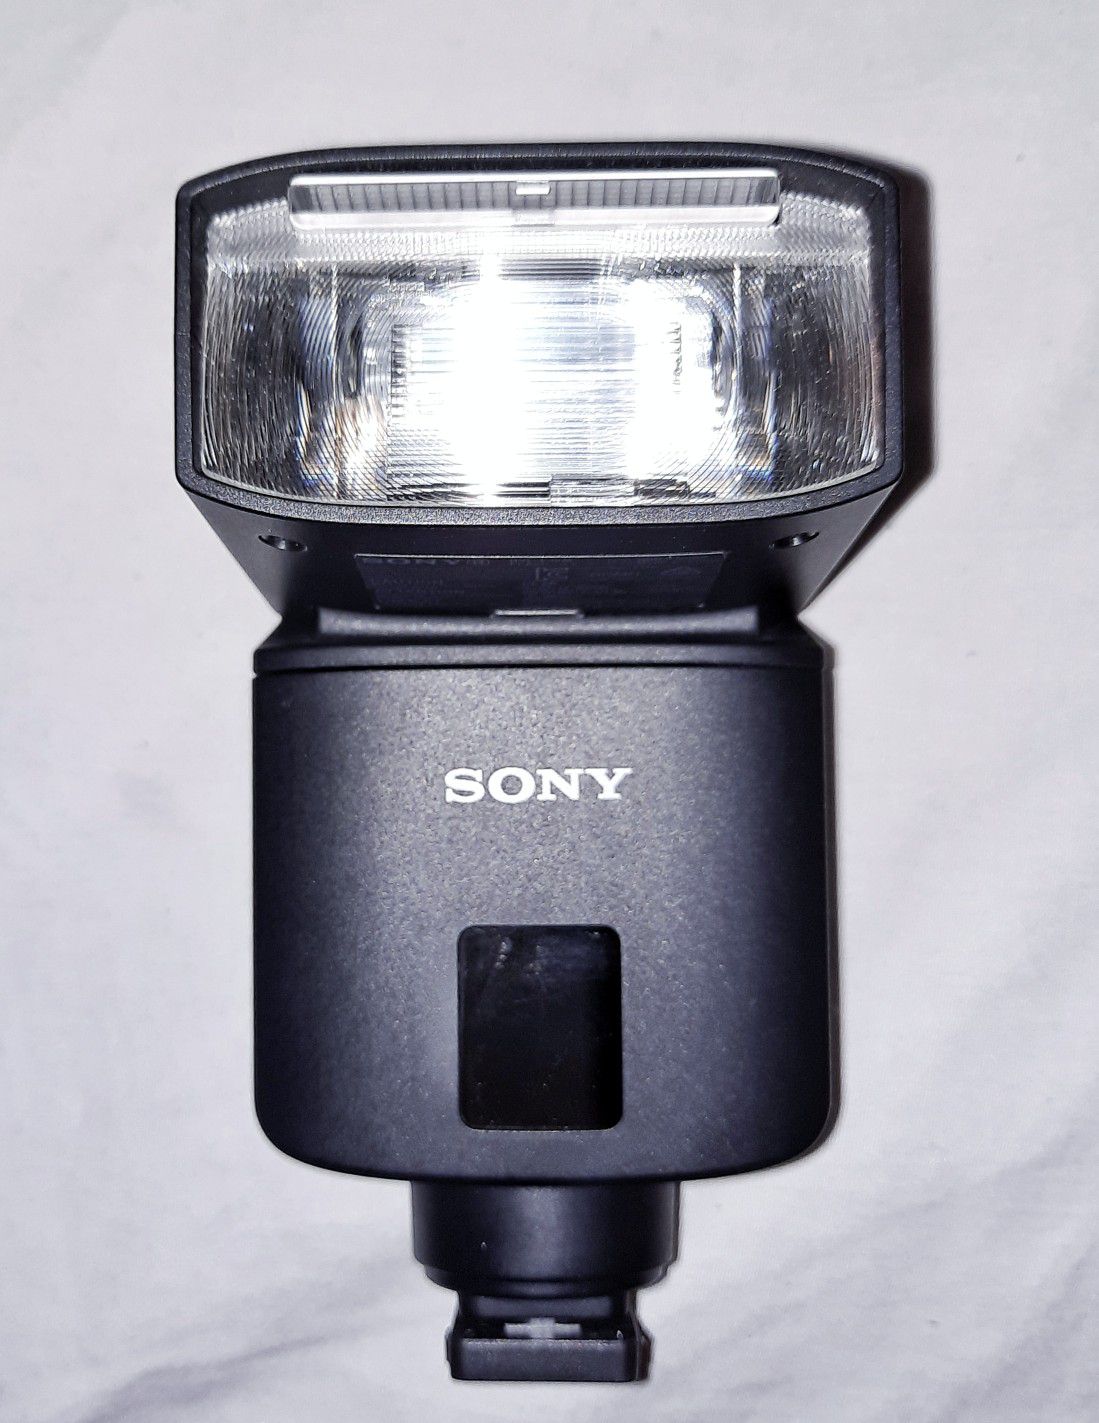 Sony External Camera Flash